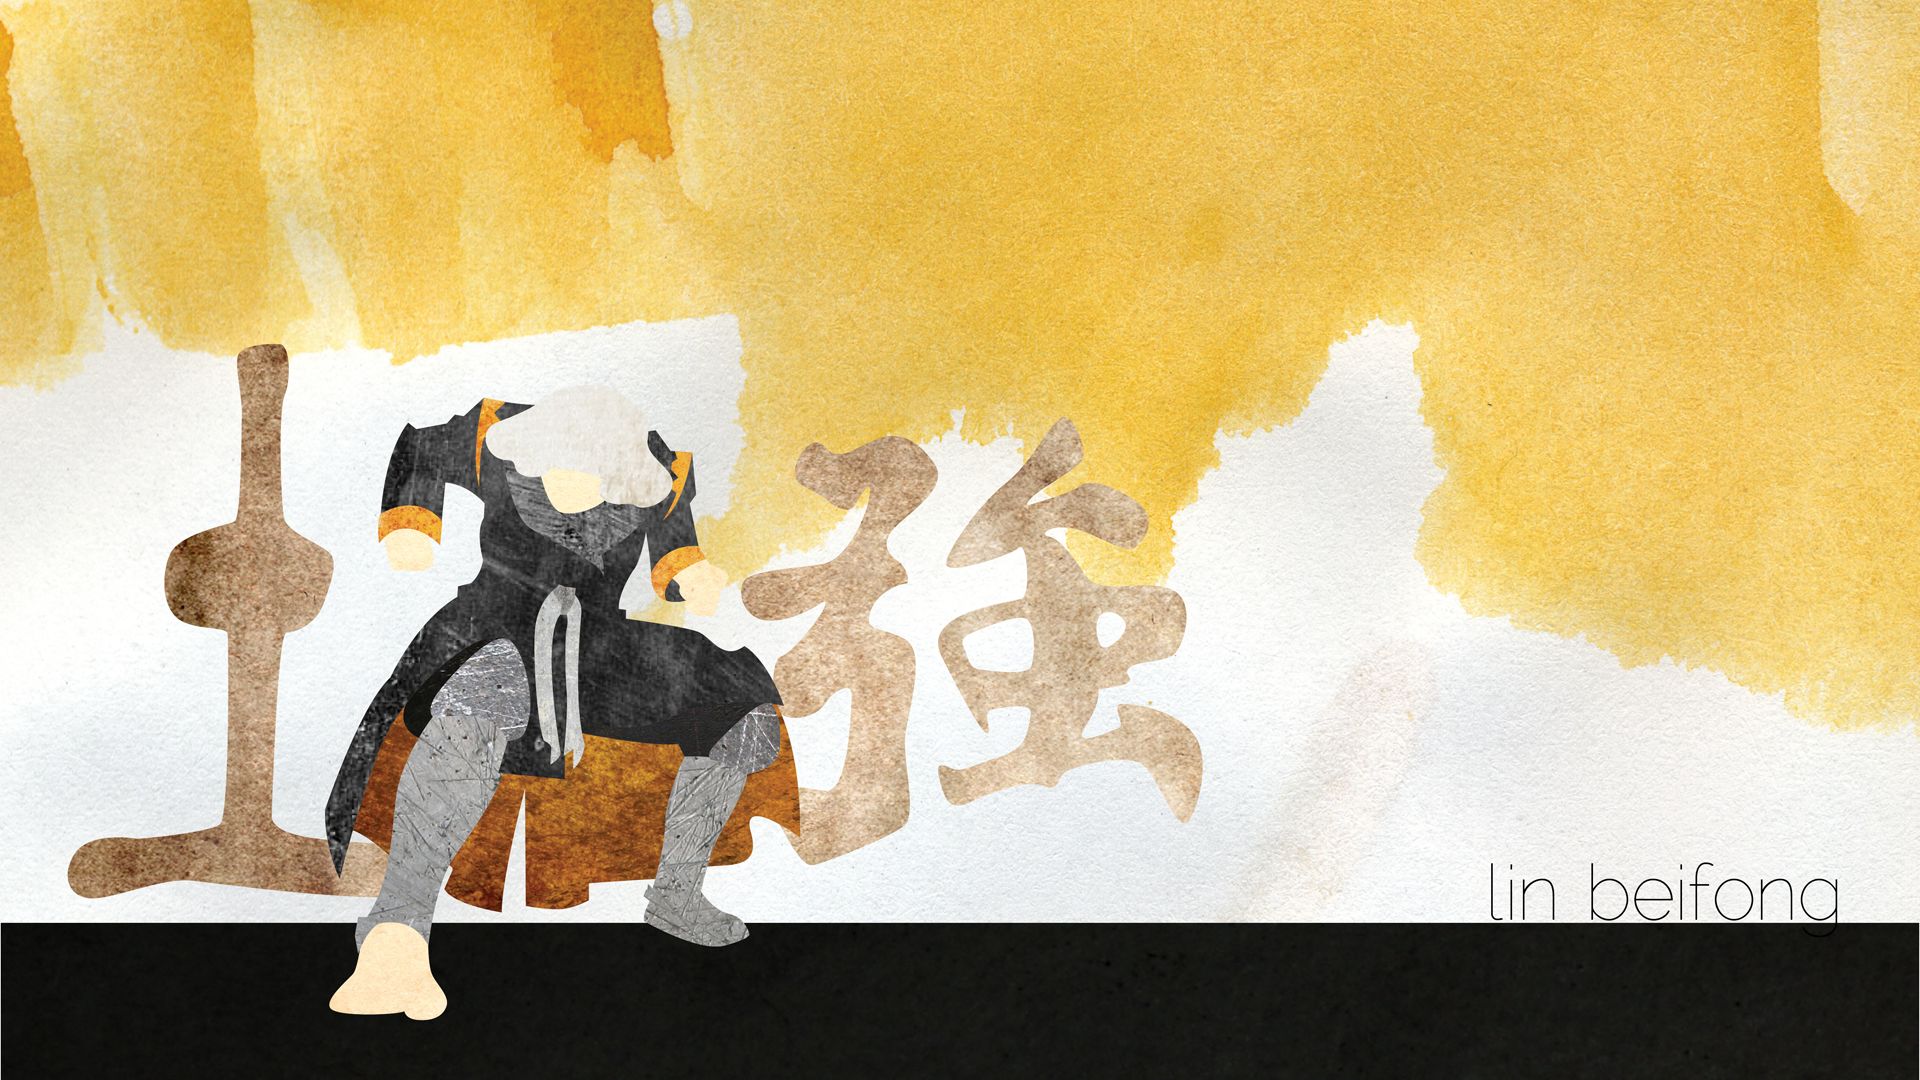 Descarga gratuita de fondo de pantalla para móvil de Avatar (Anime), Avatar: La Leyenda De Korra, Animado.